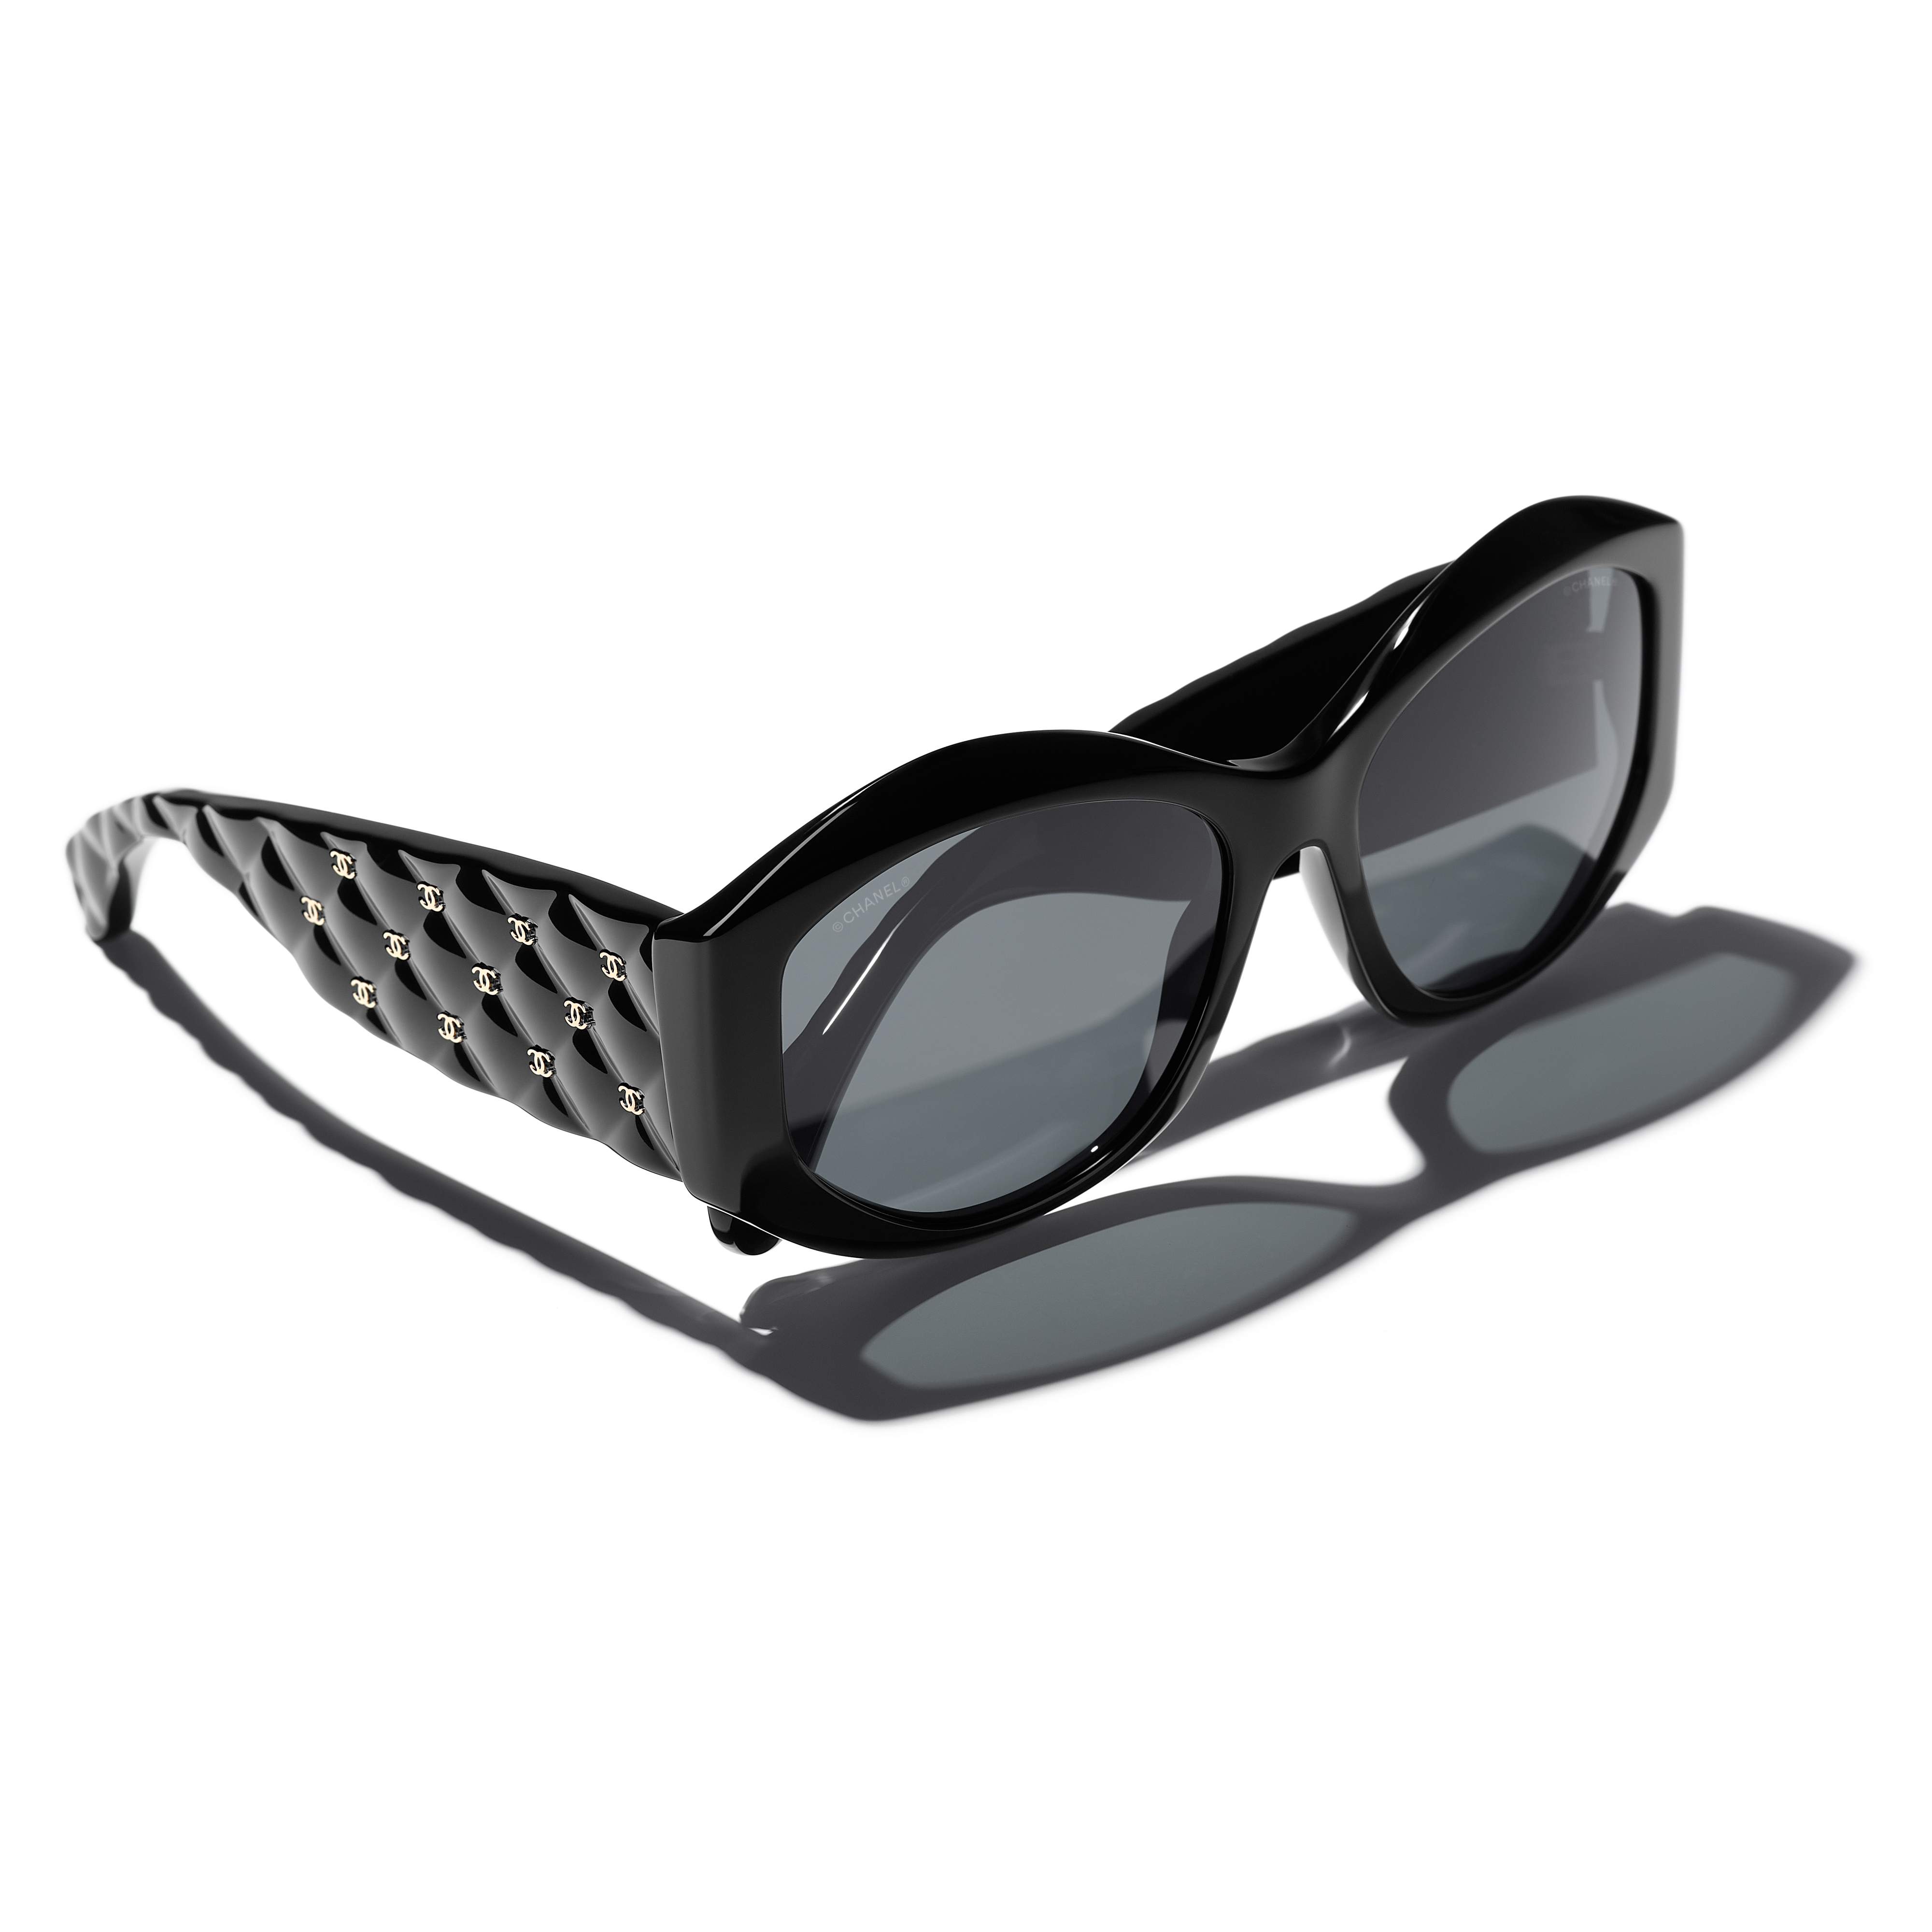 Chanel #16 sunglasses black - Gem